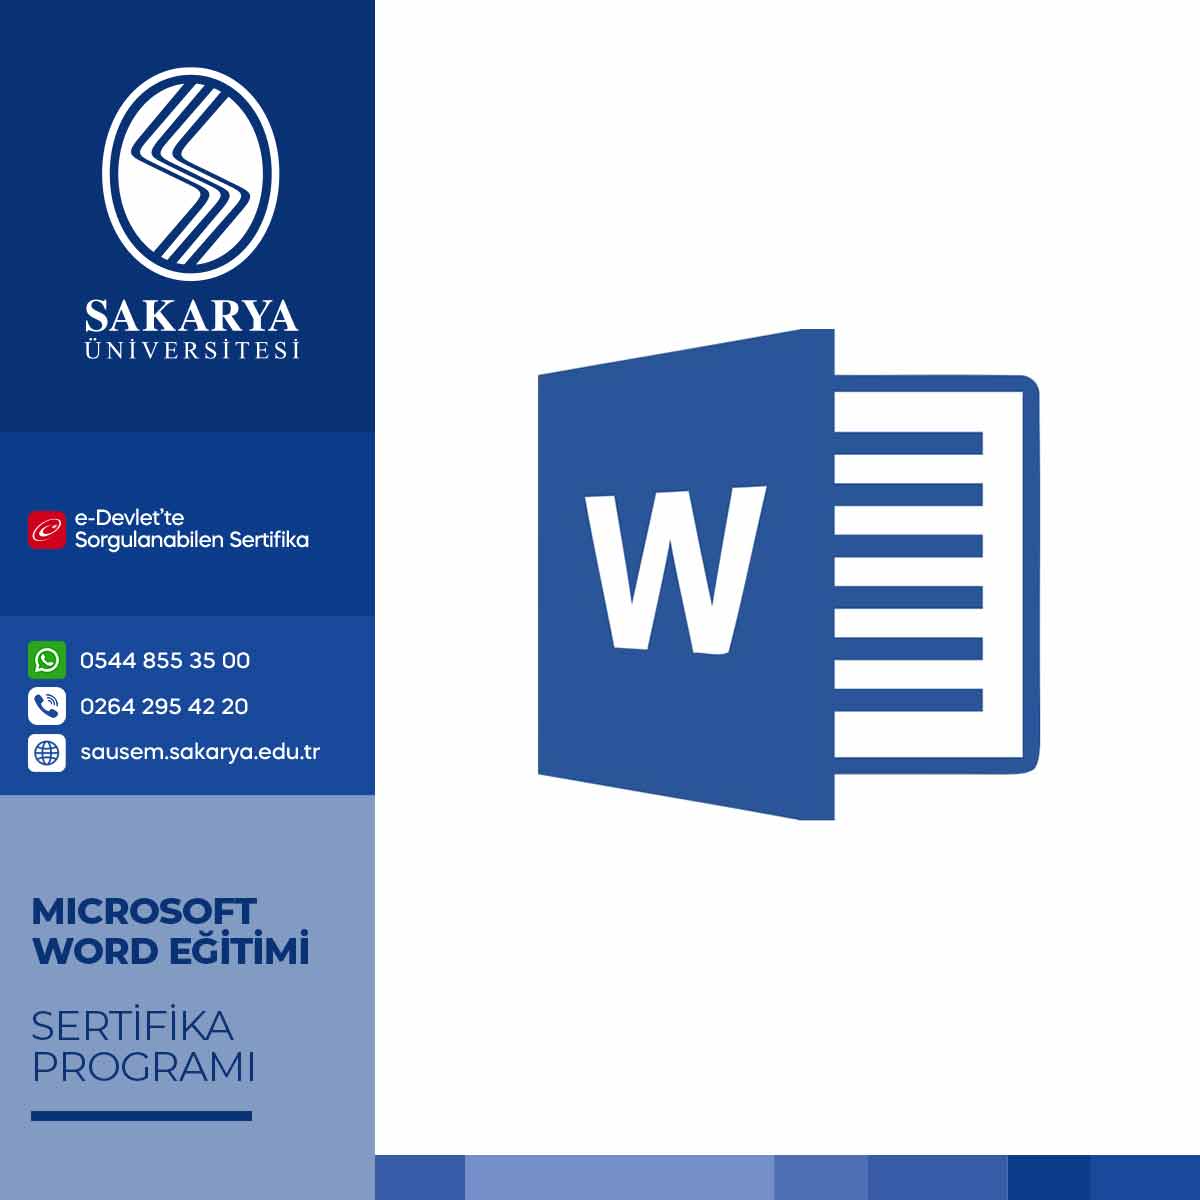 Microsoft Word Eğitimi Sertifika Programı